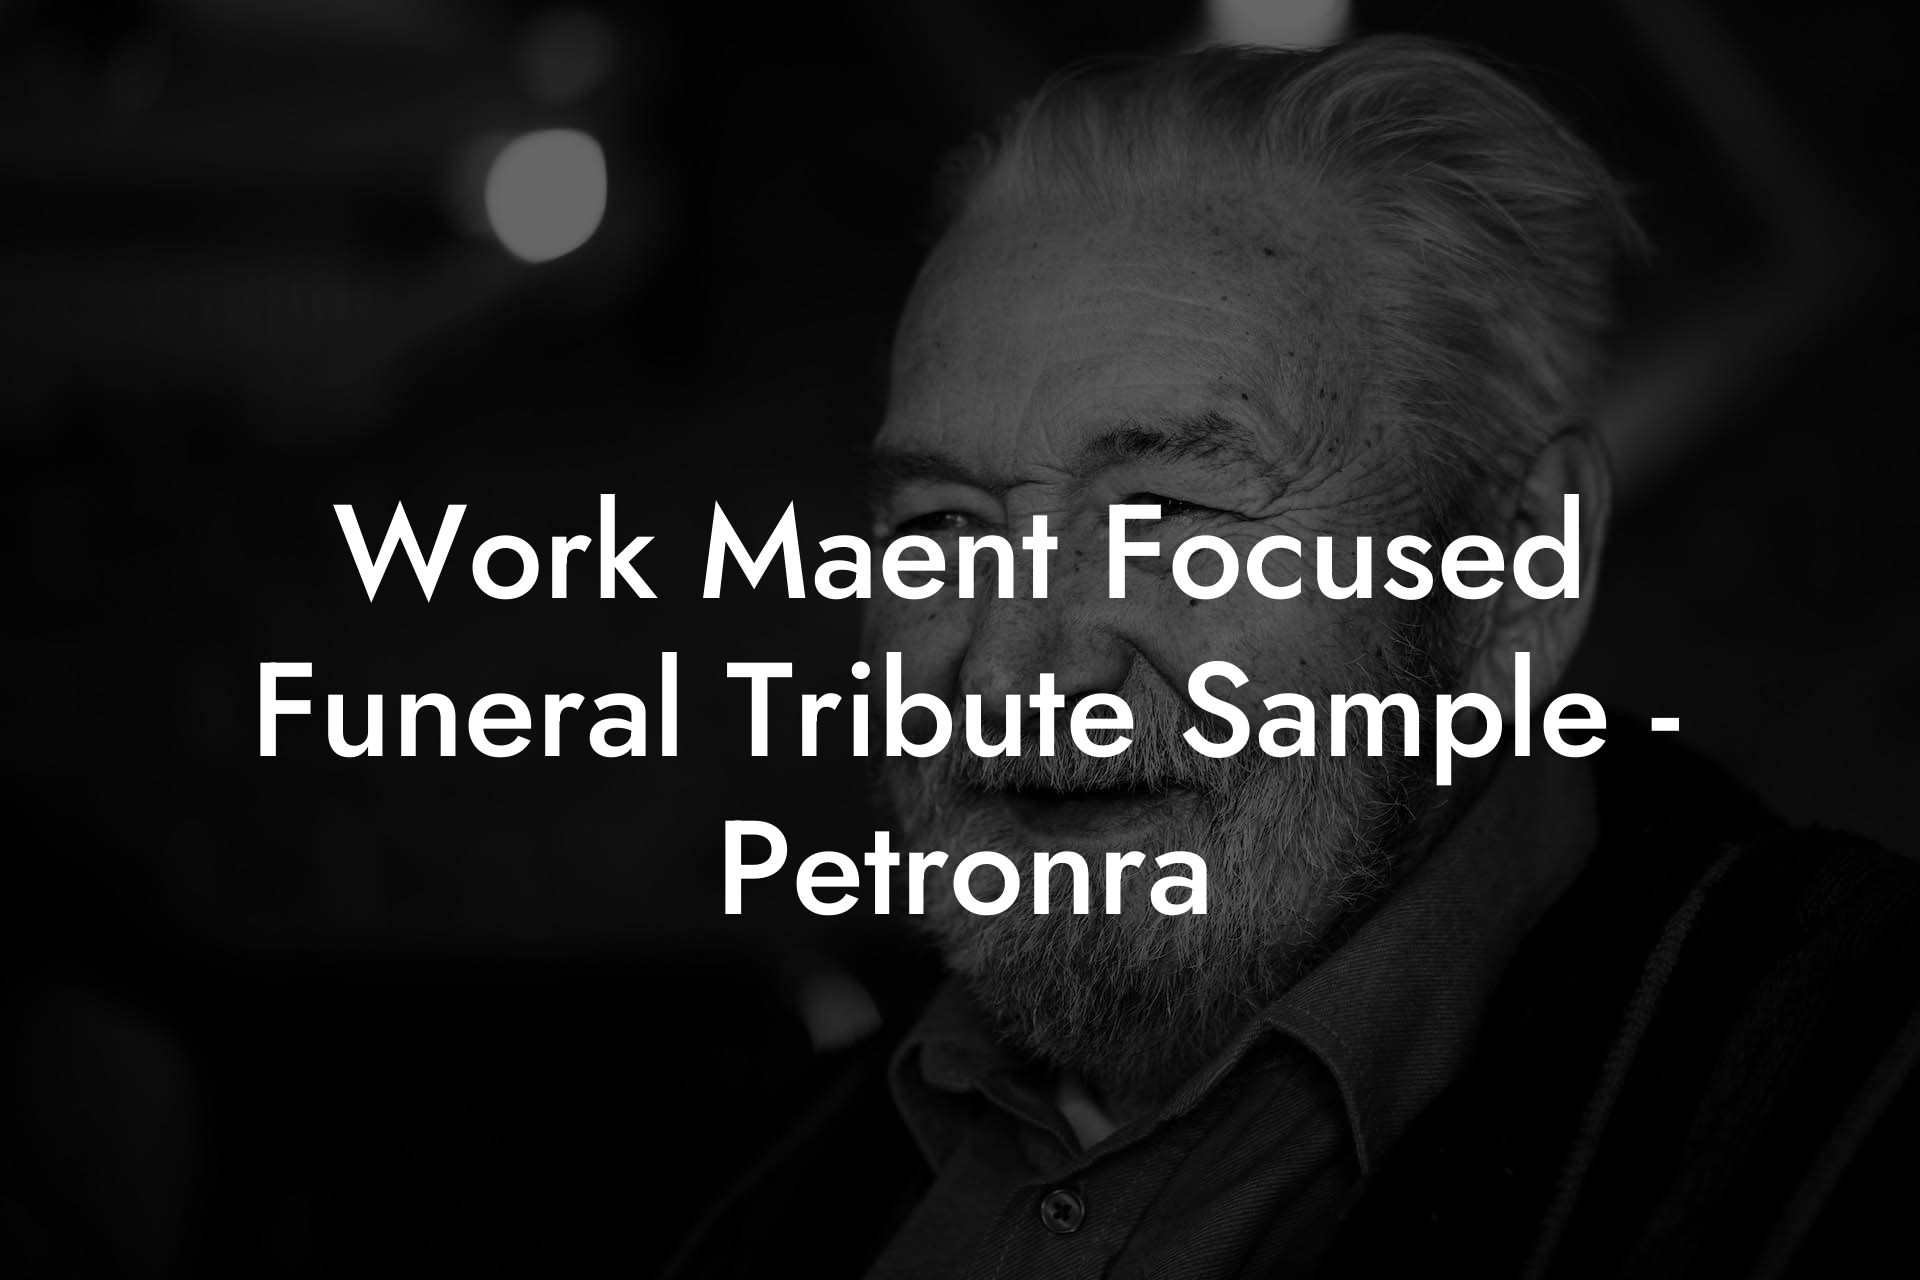 Work Maent Focused Funeral Tribute Sample - Petronra